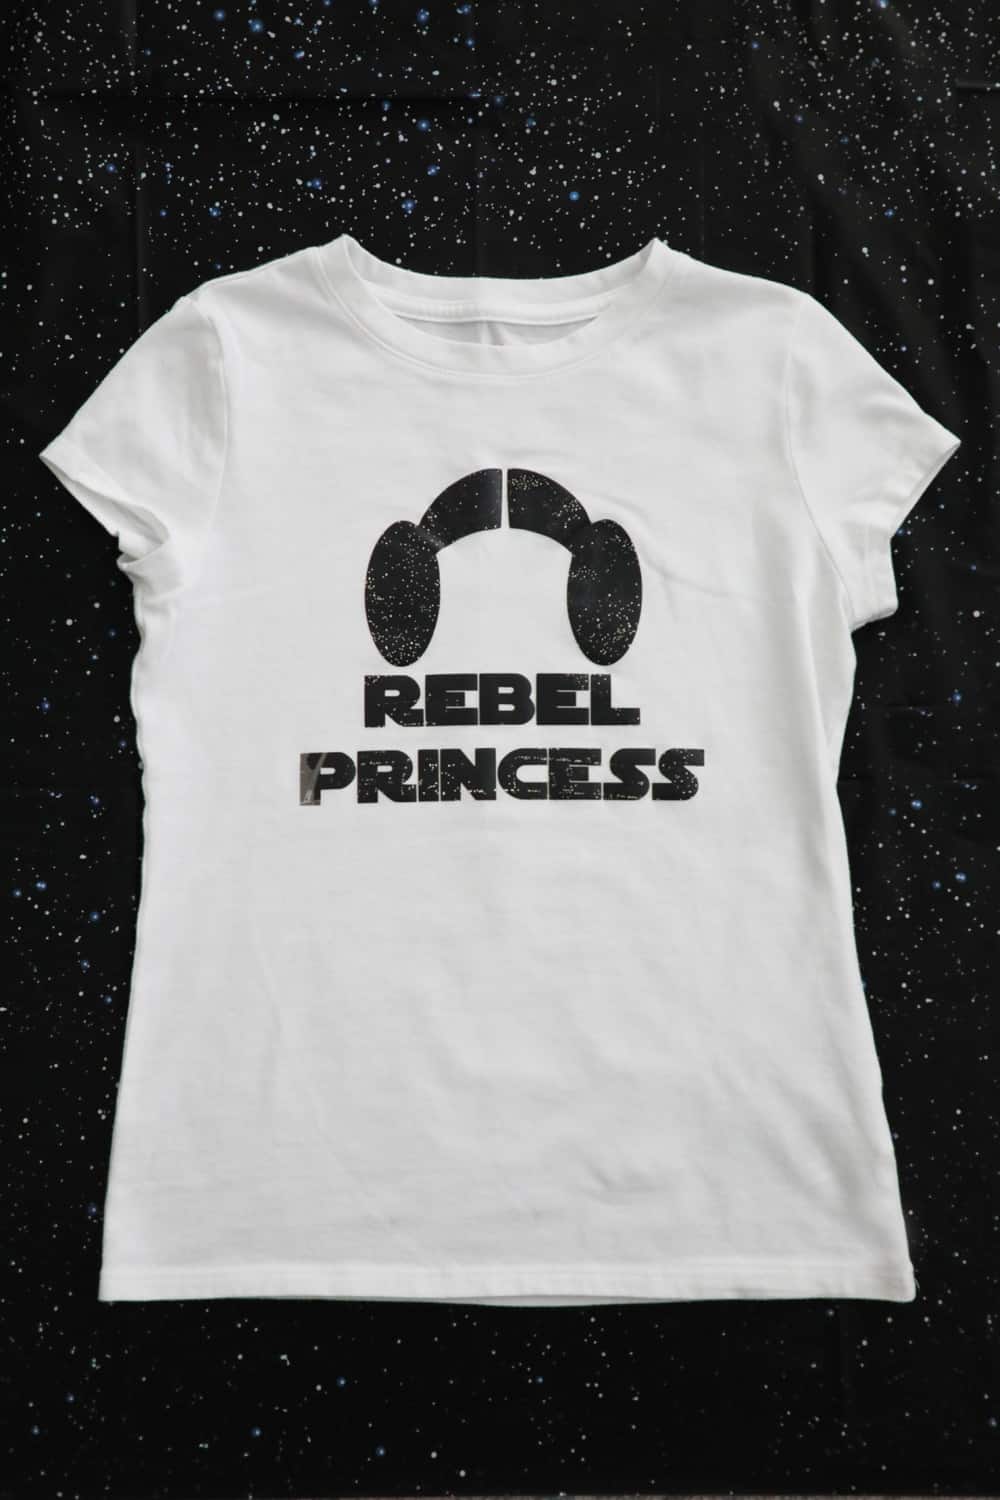 white t shirt that says "rebel princess" and has princess leia buns. 